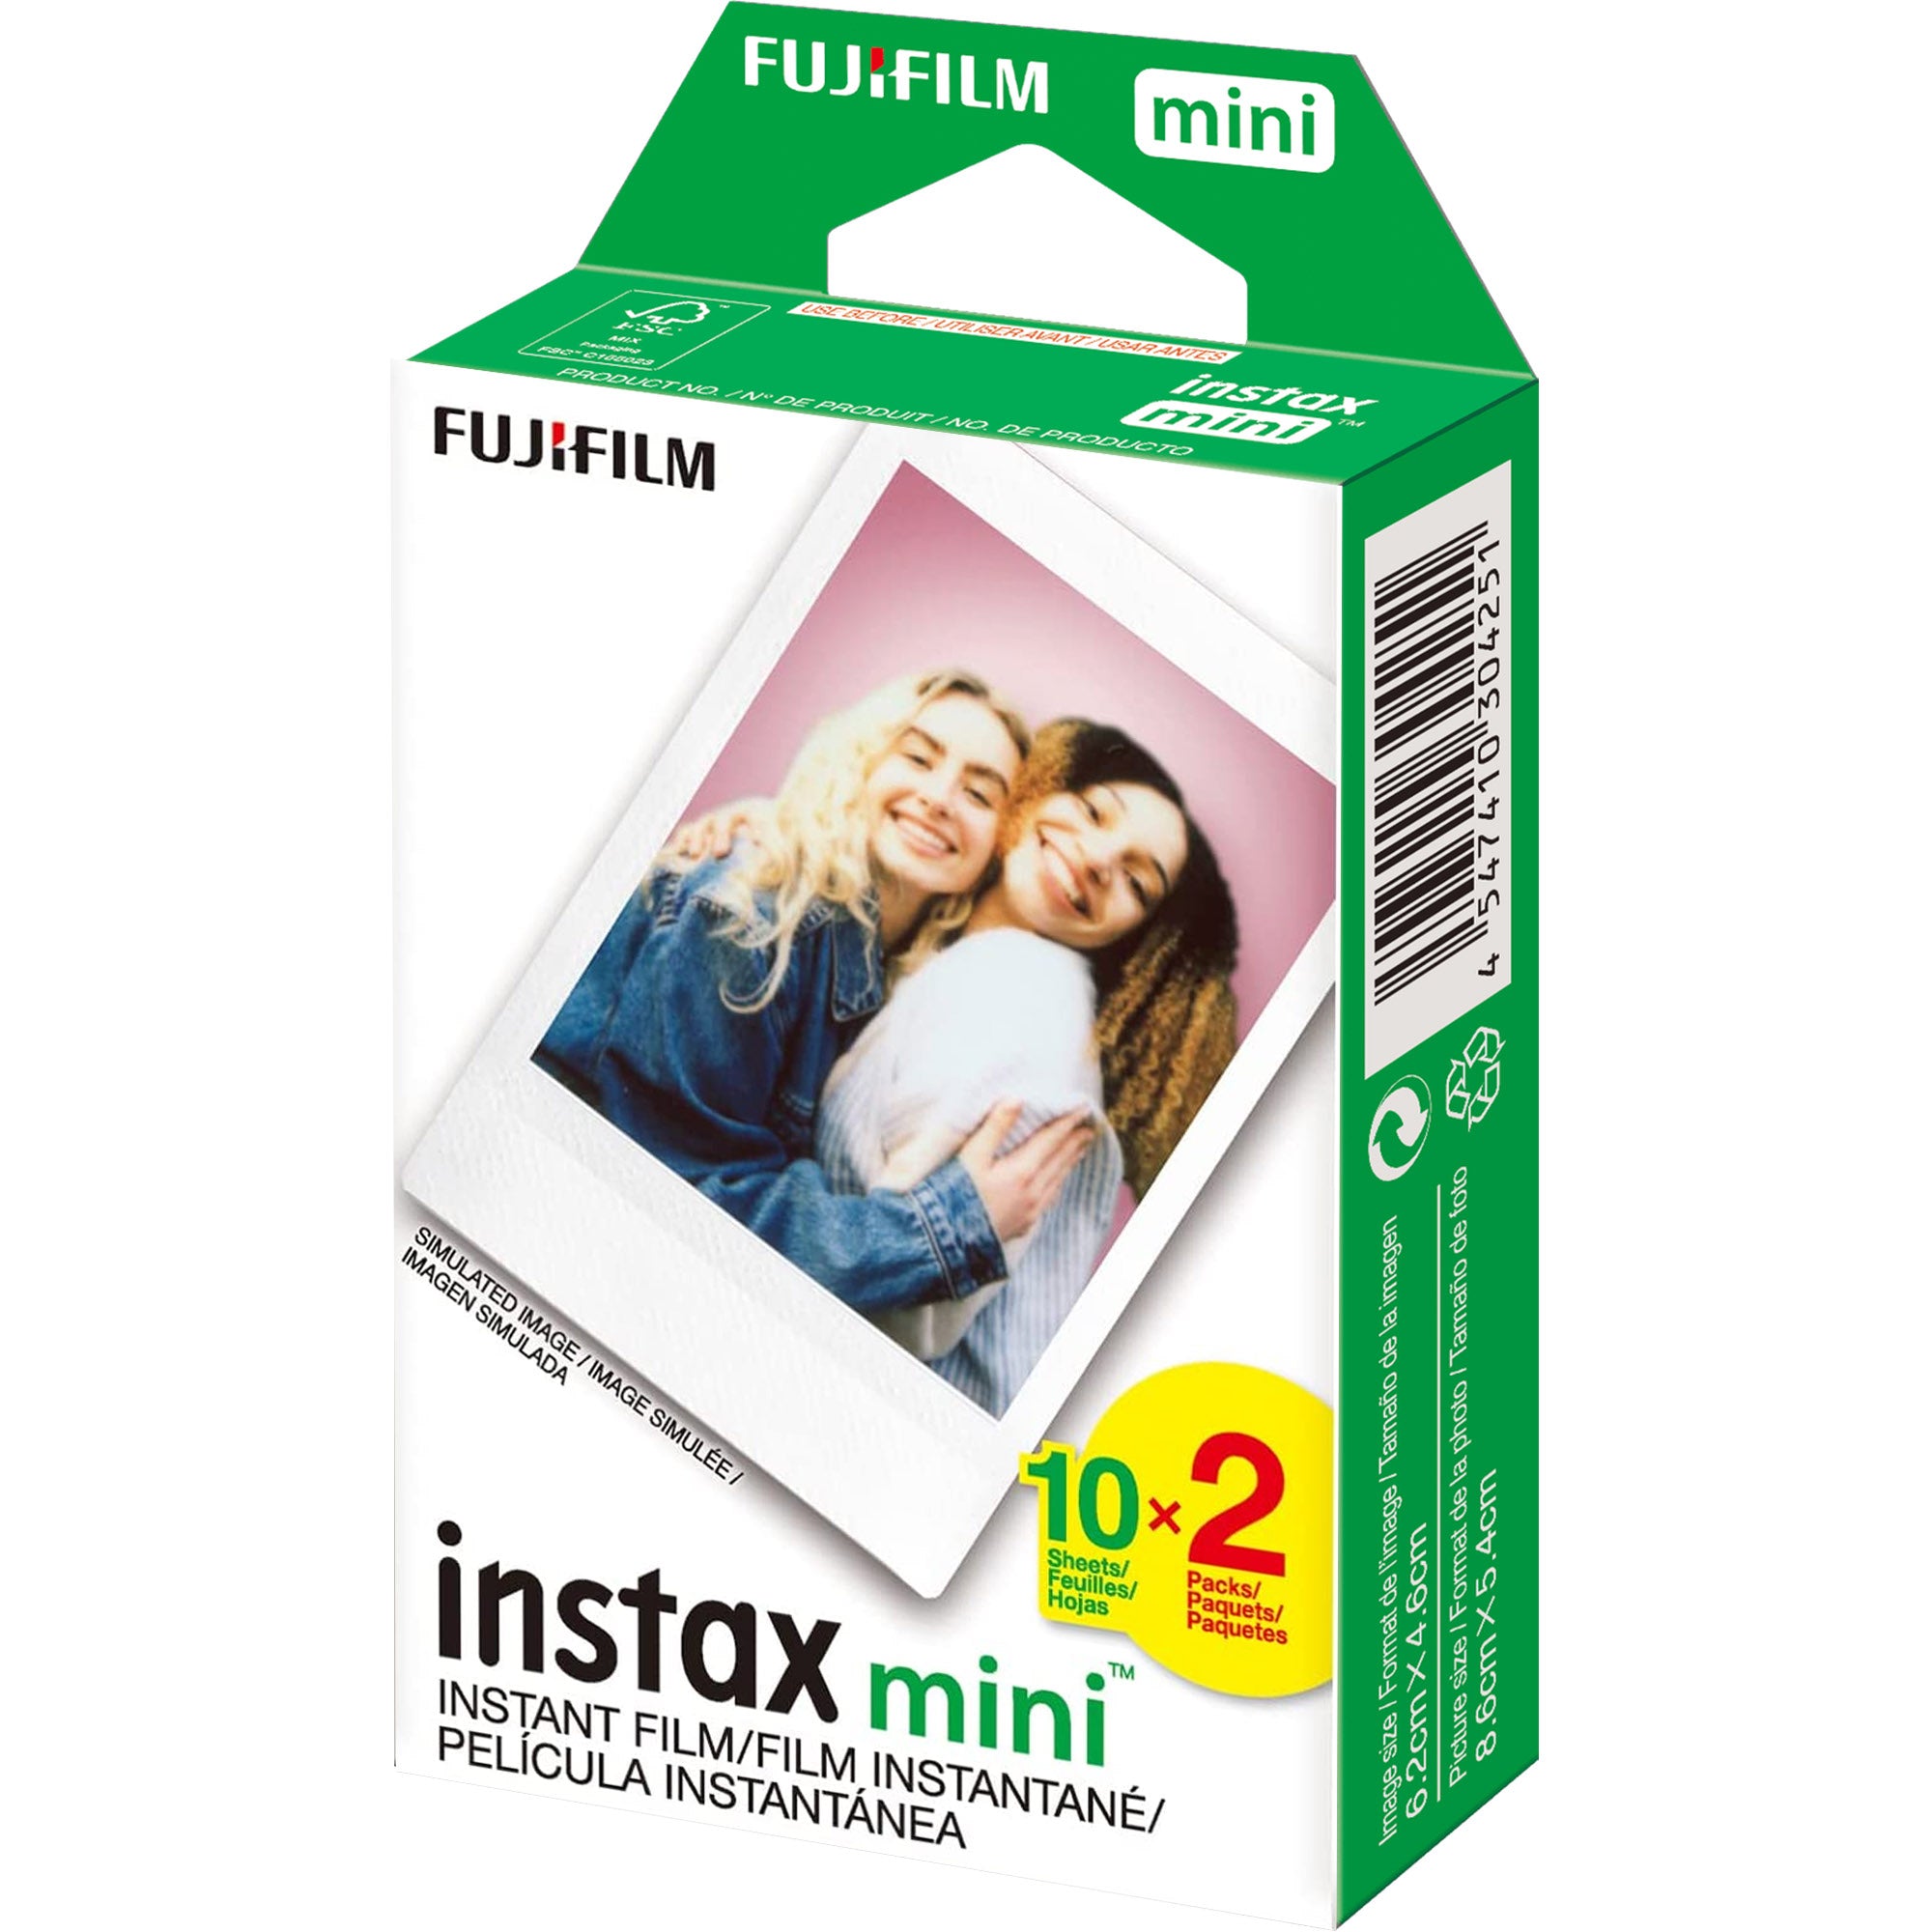 Essentials Bundle for Fujifilm Instax Mini Film Camera with 40 Films + More